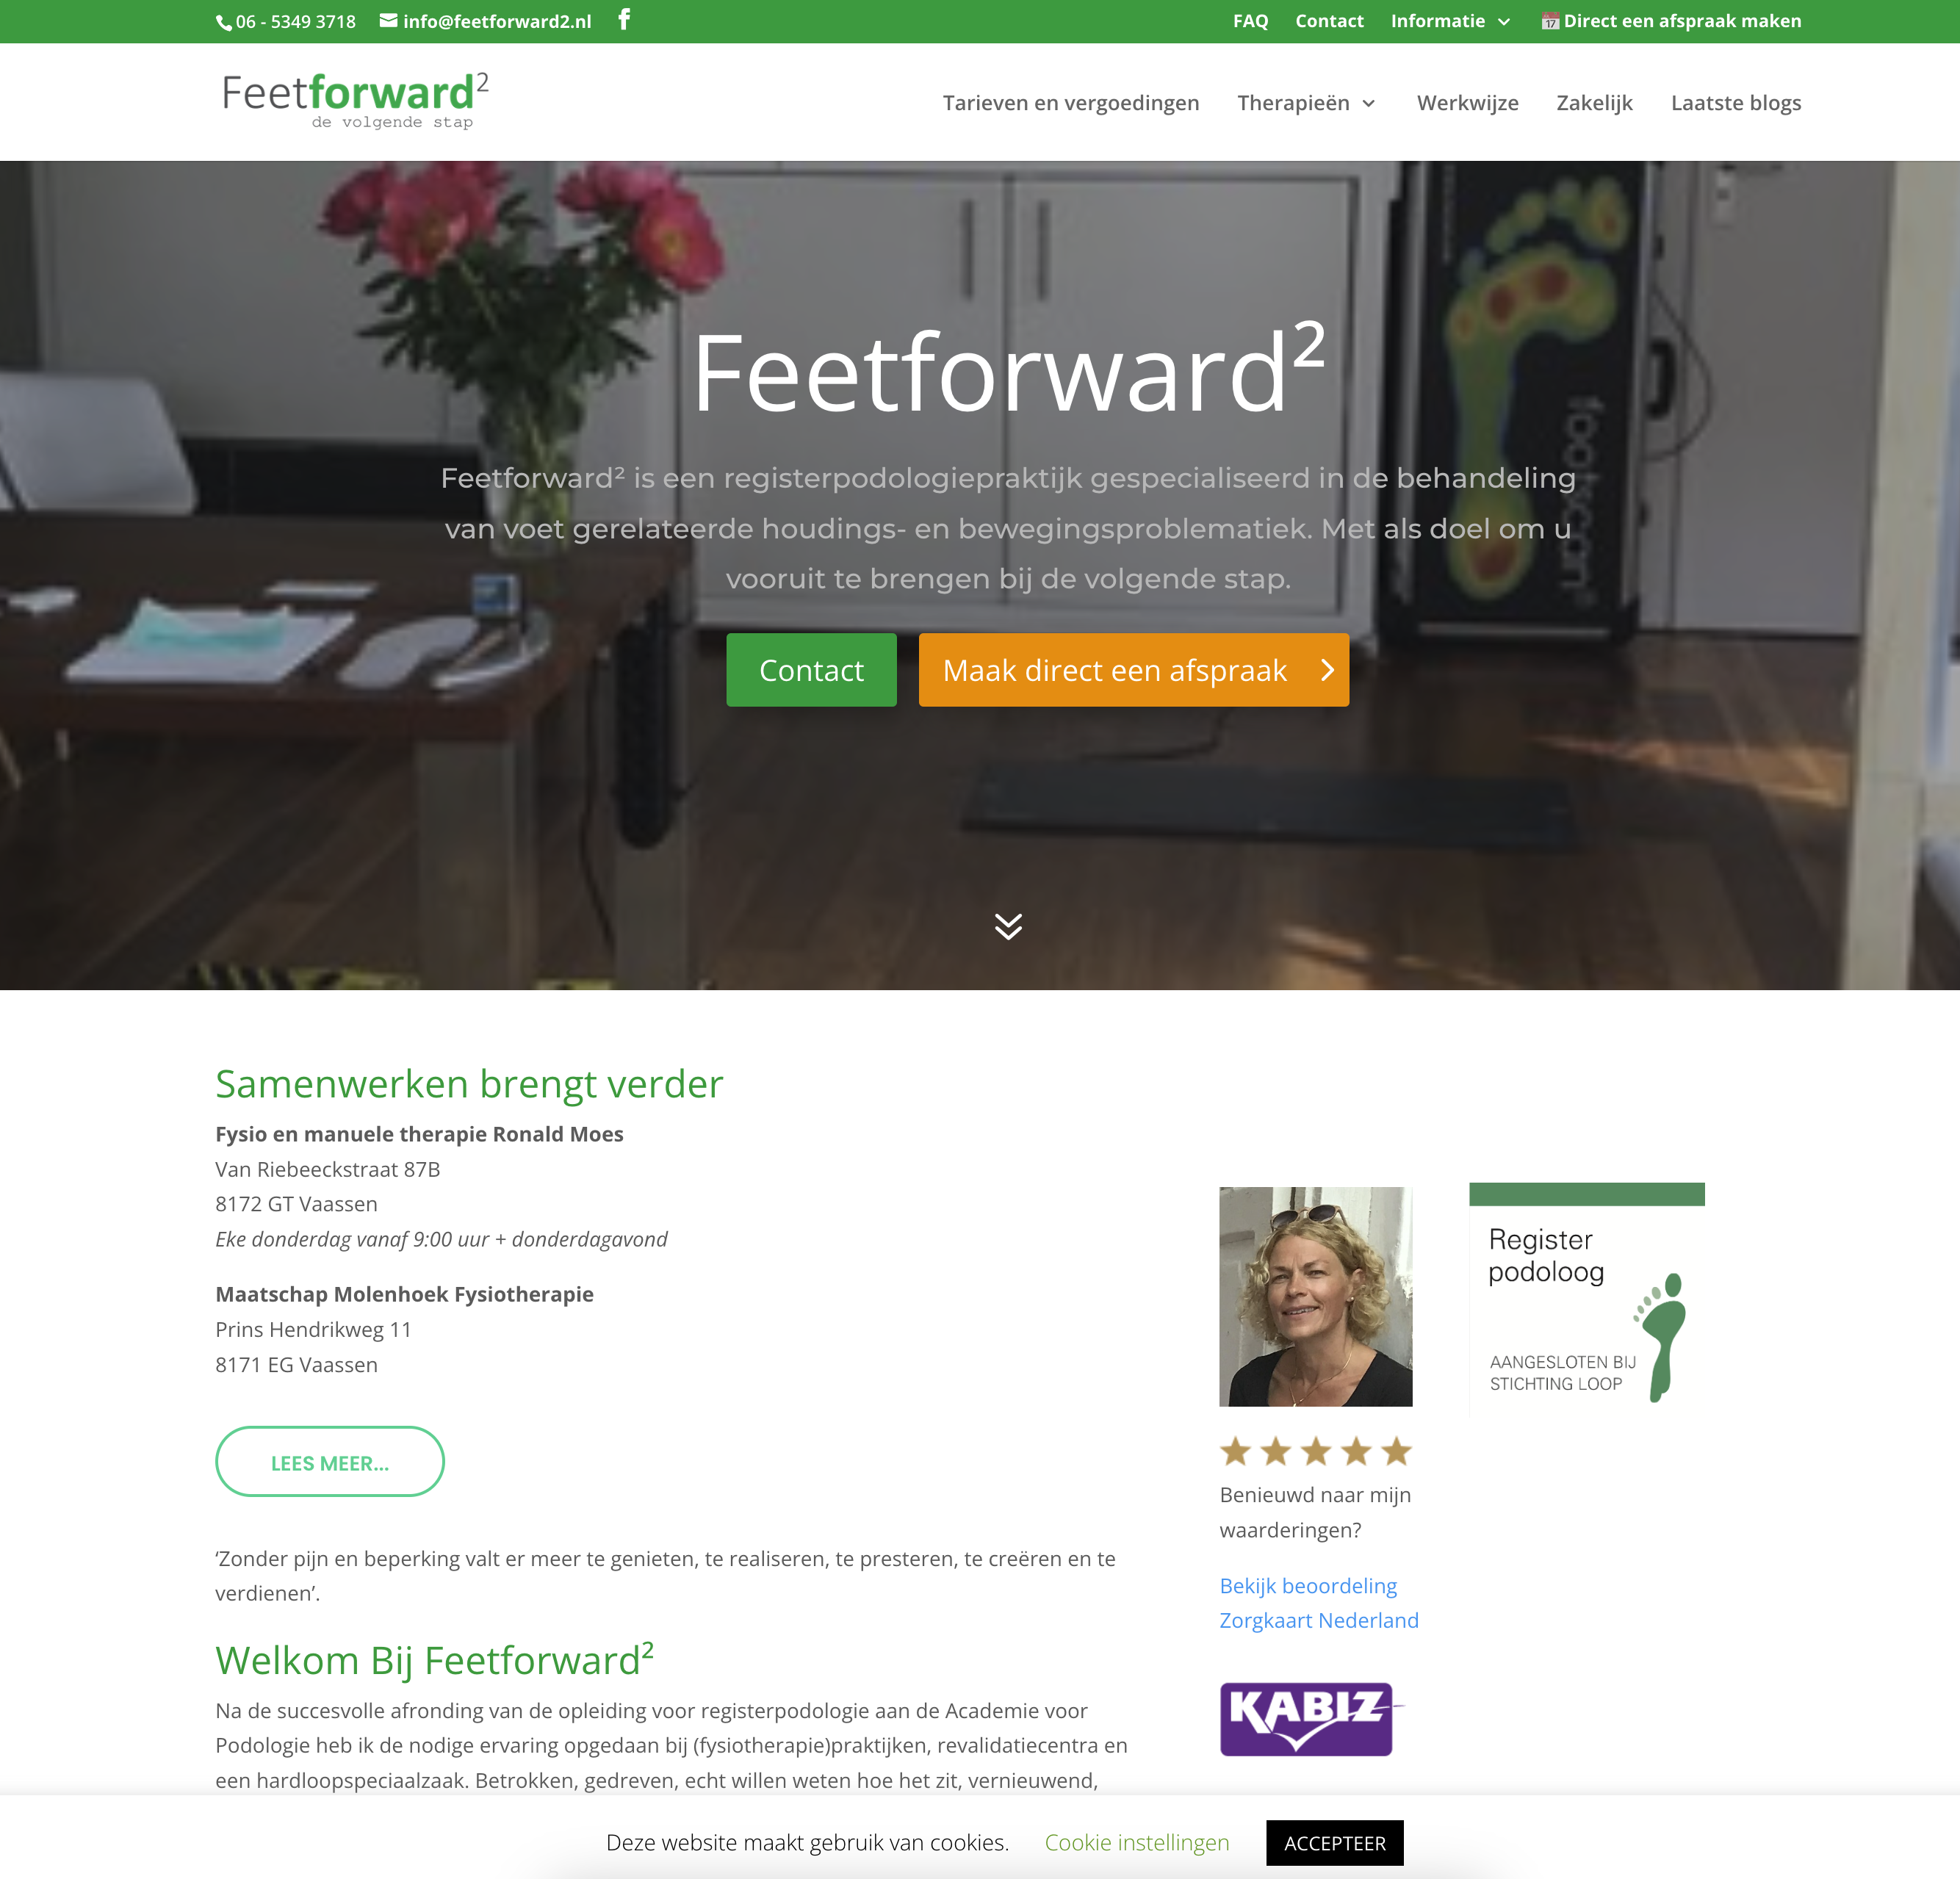 Website: Feetforward²